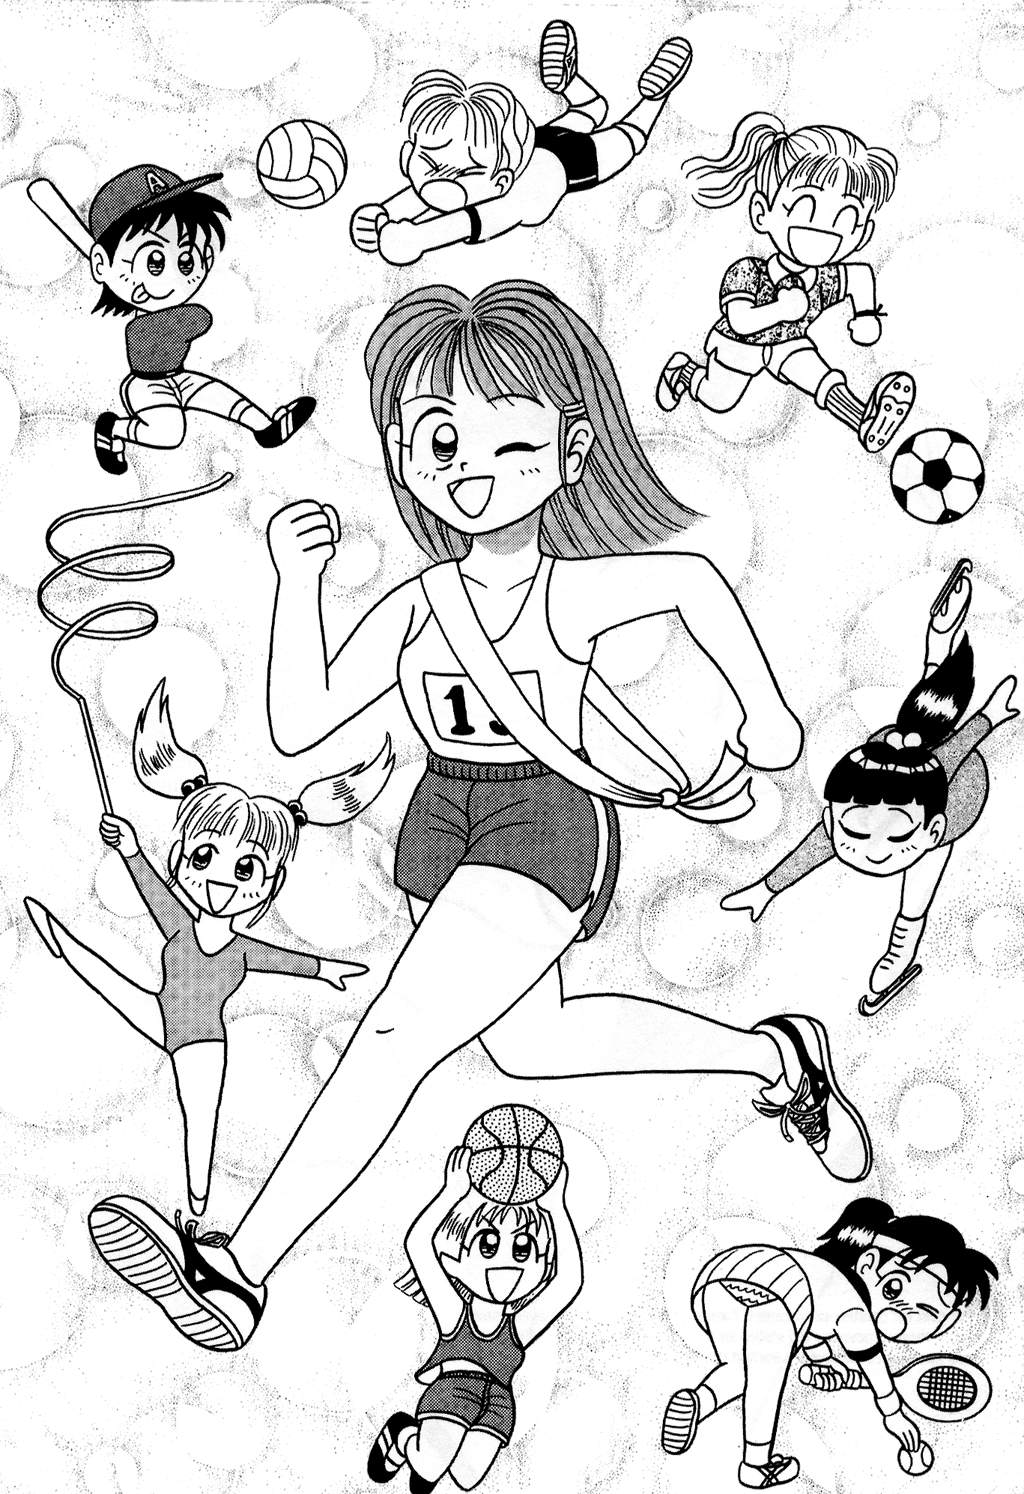 Le dessin du Manga 04 - Personnages feminin, Attitudes, Expressions numero d'image 119